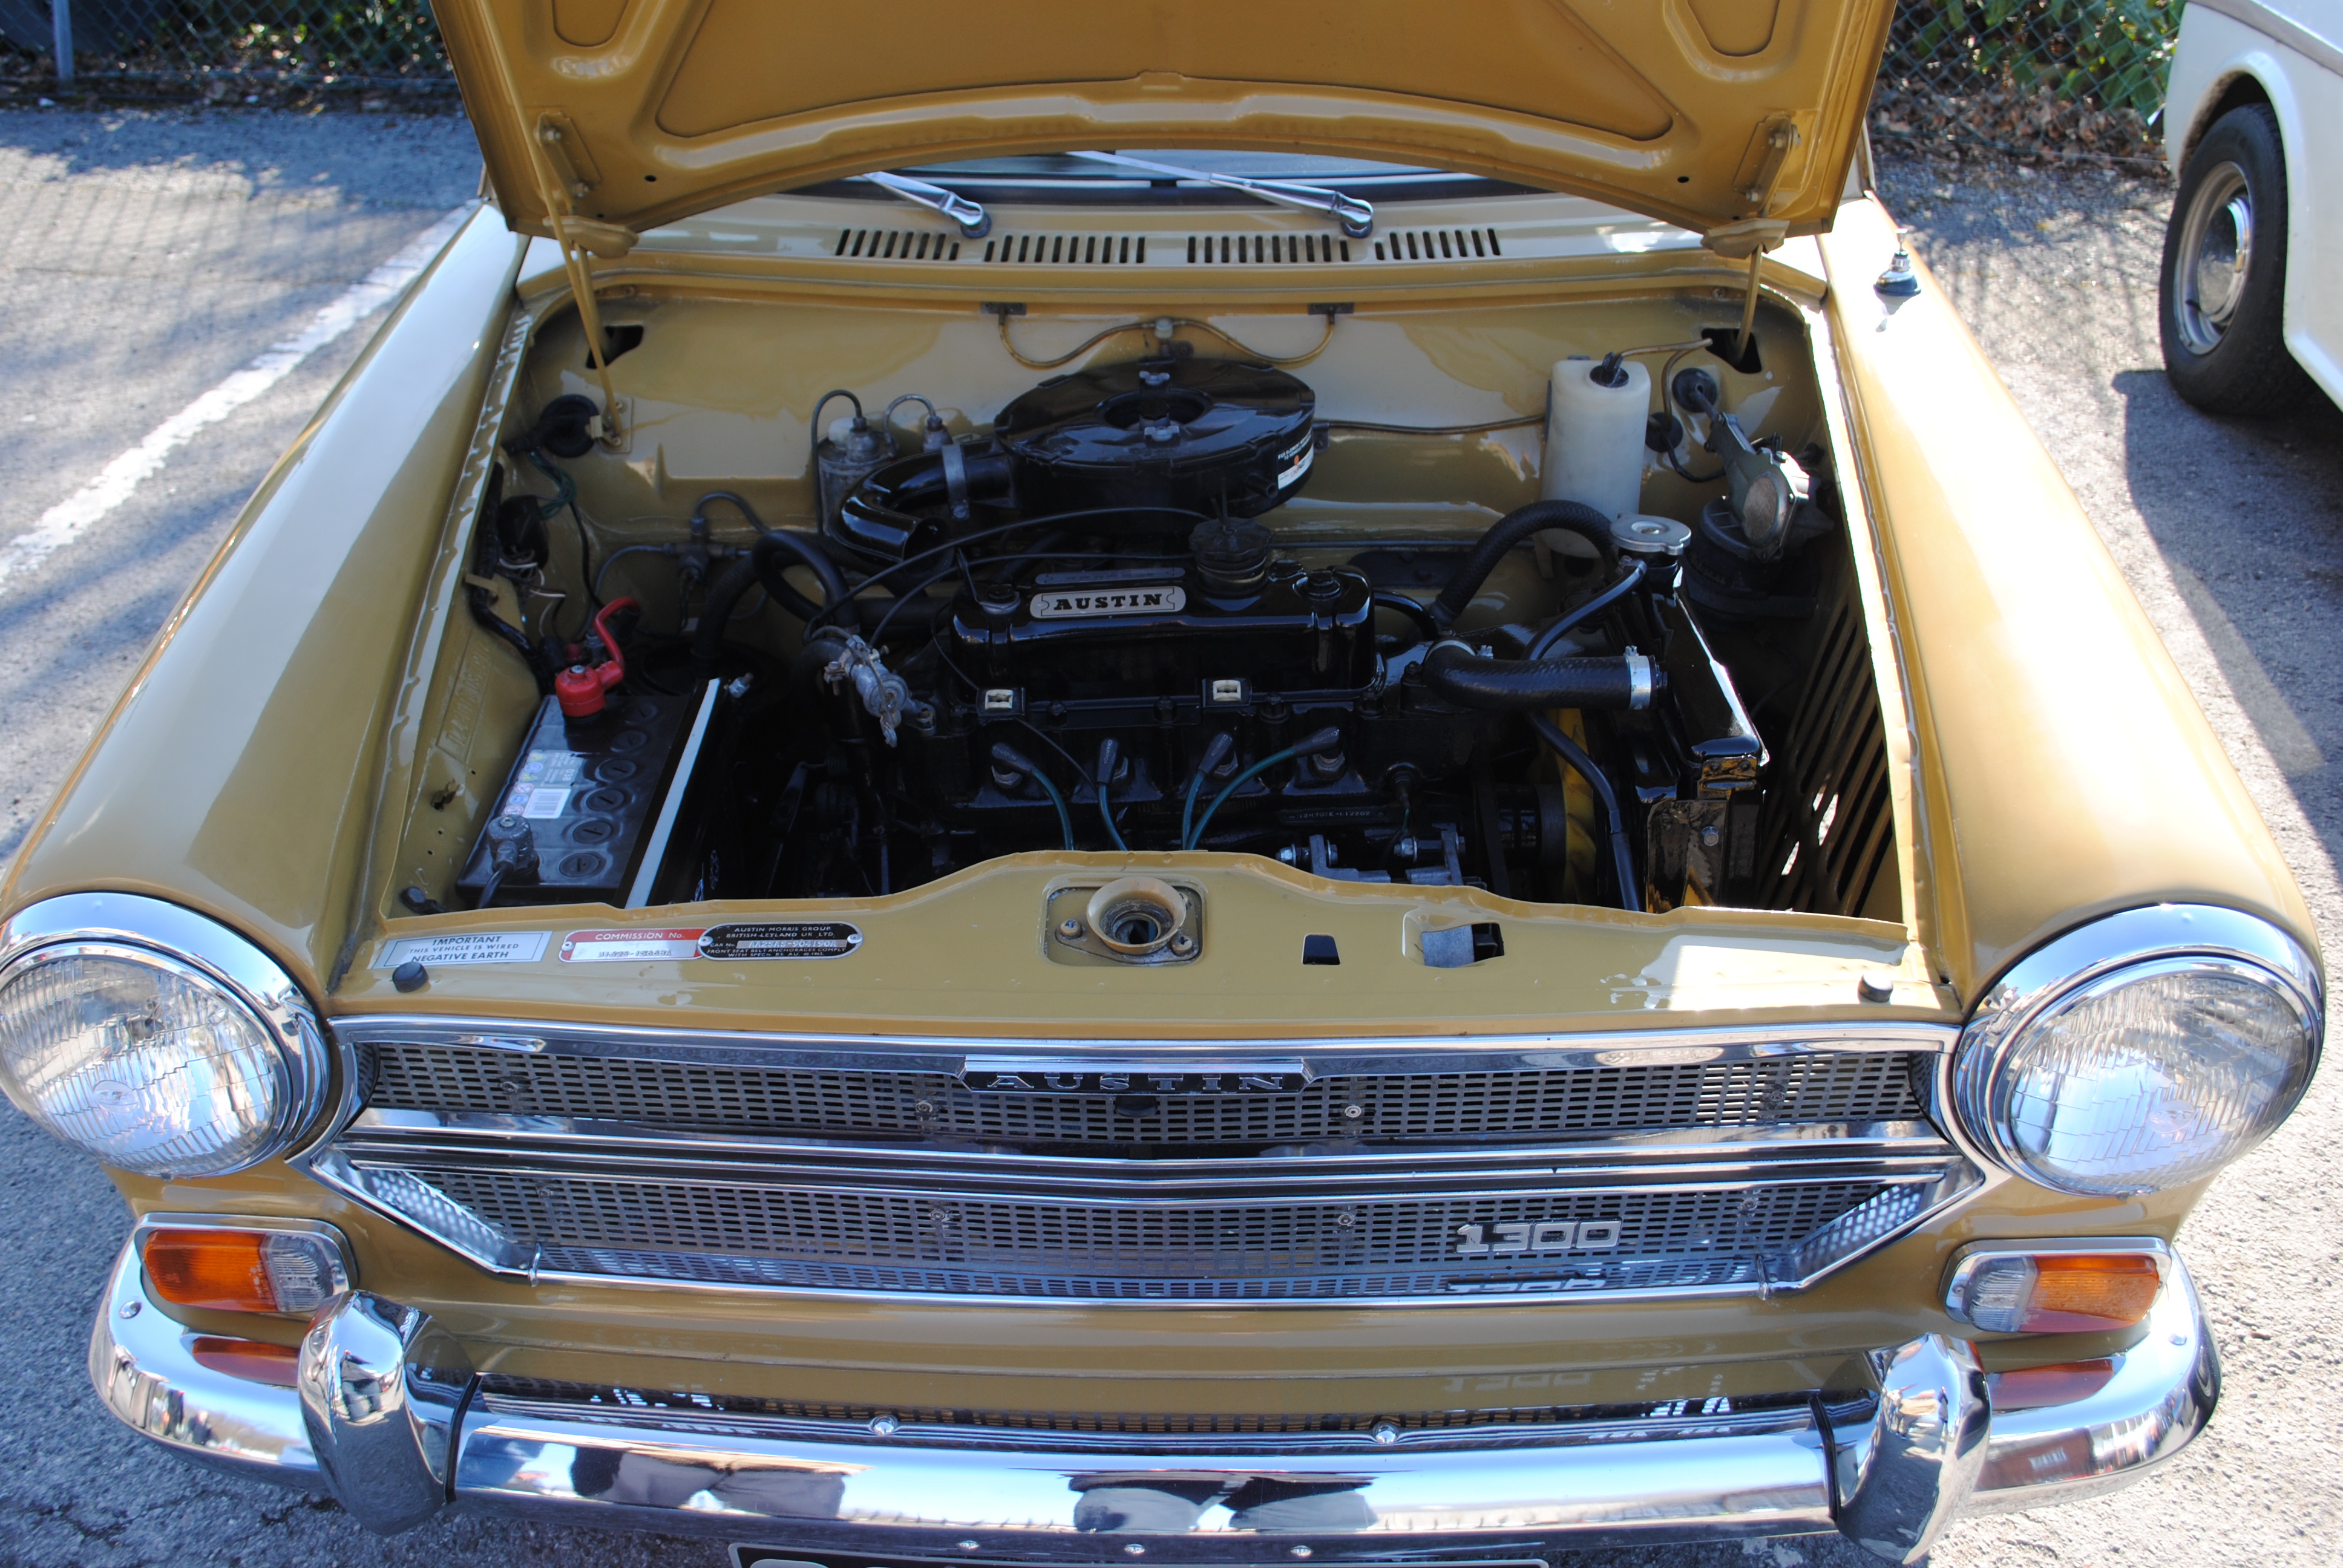 Austin 1300 Mk3 | Flickr - Photo Sharing!